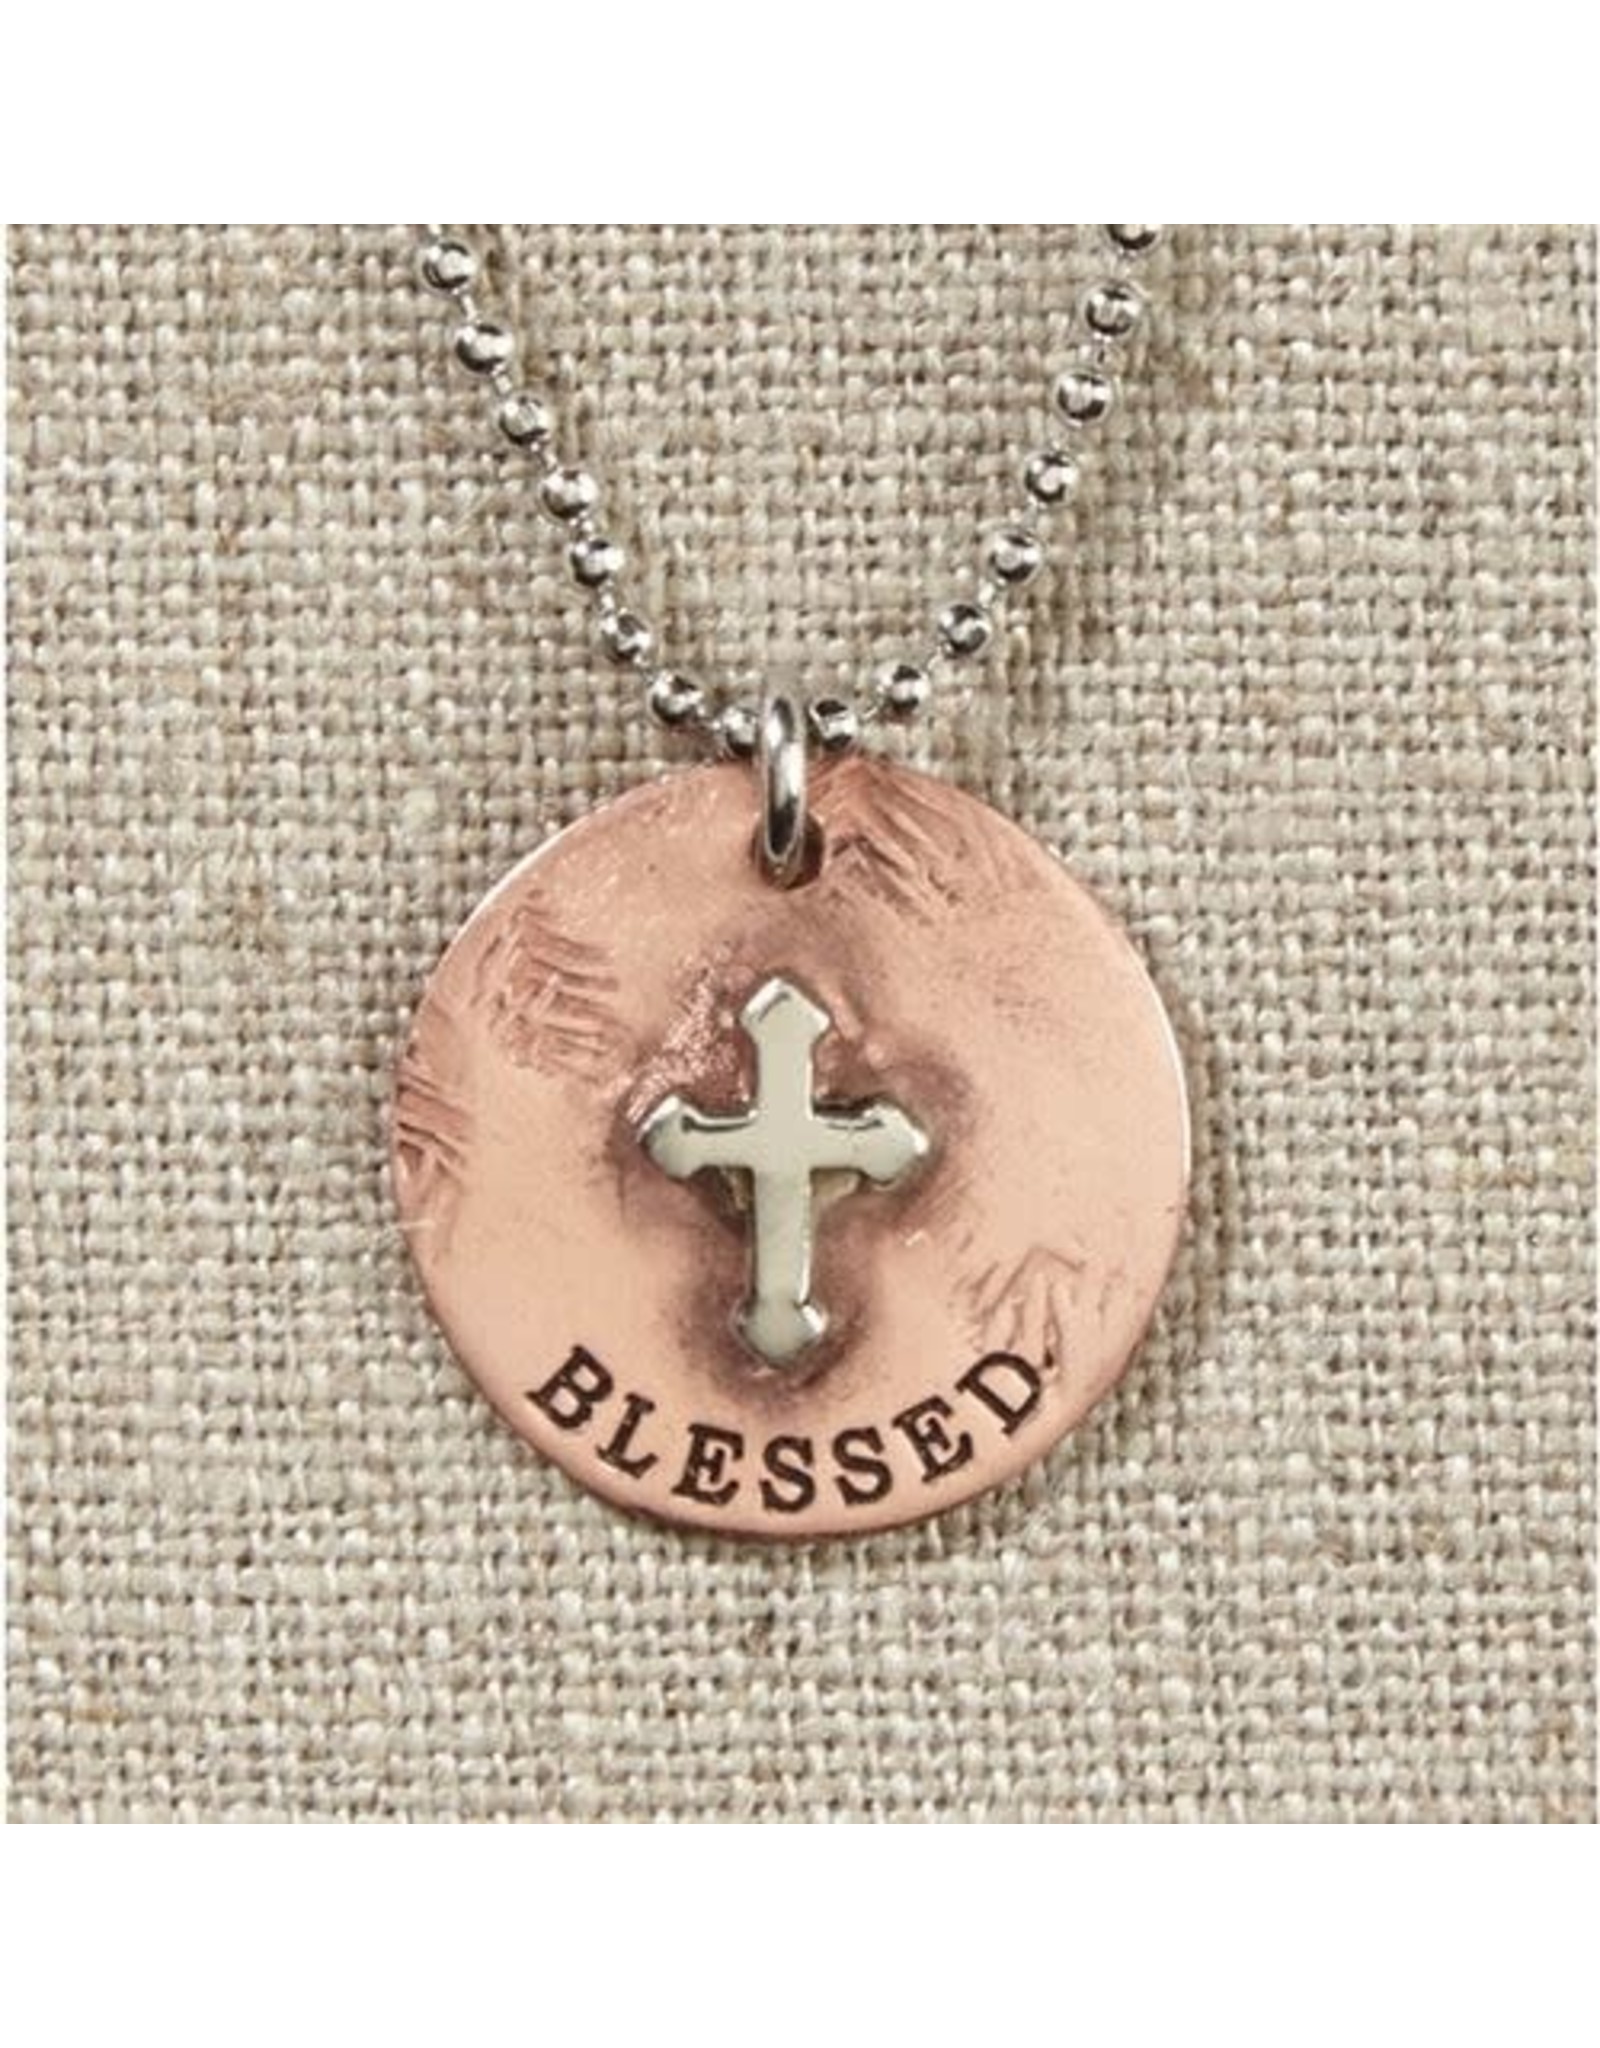 SBDS Grateful Heart - Grateful Cross Necklace